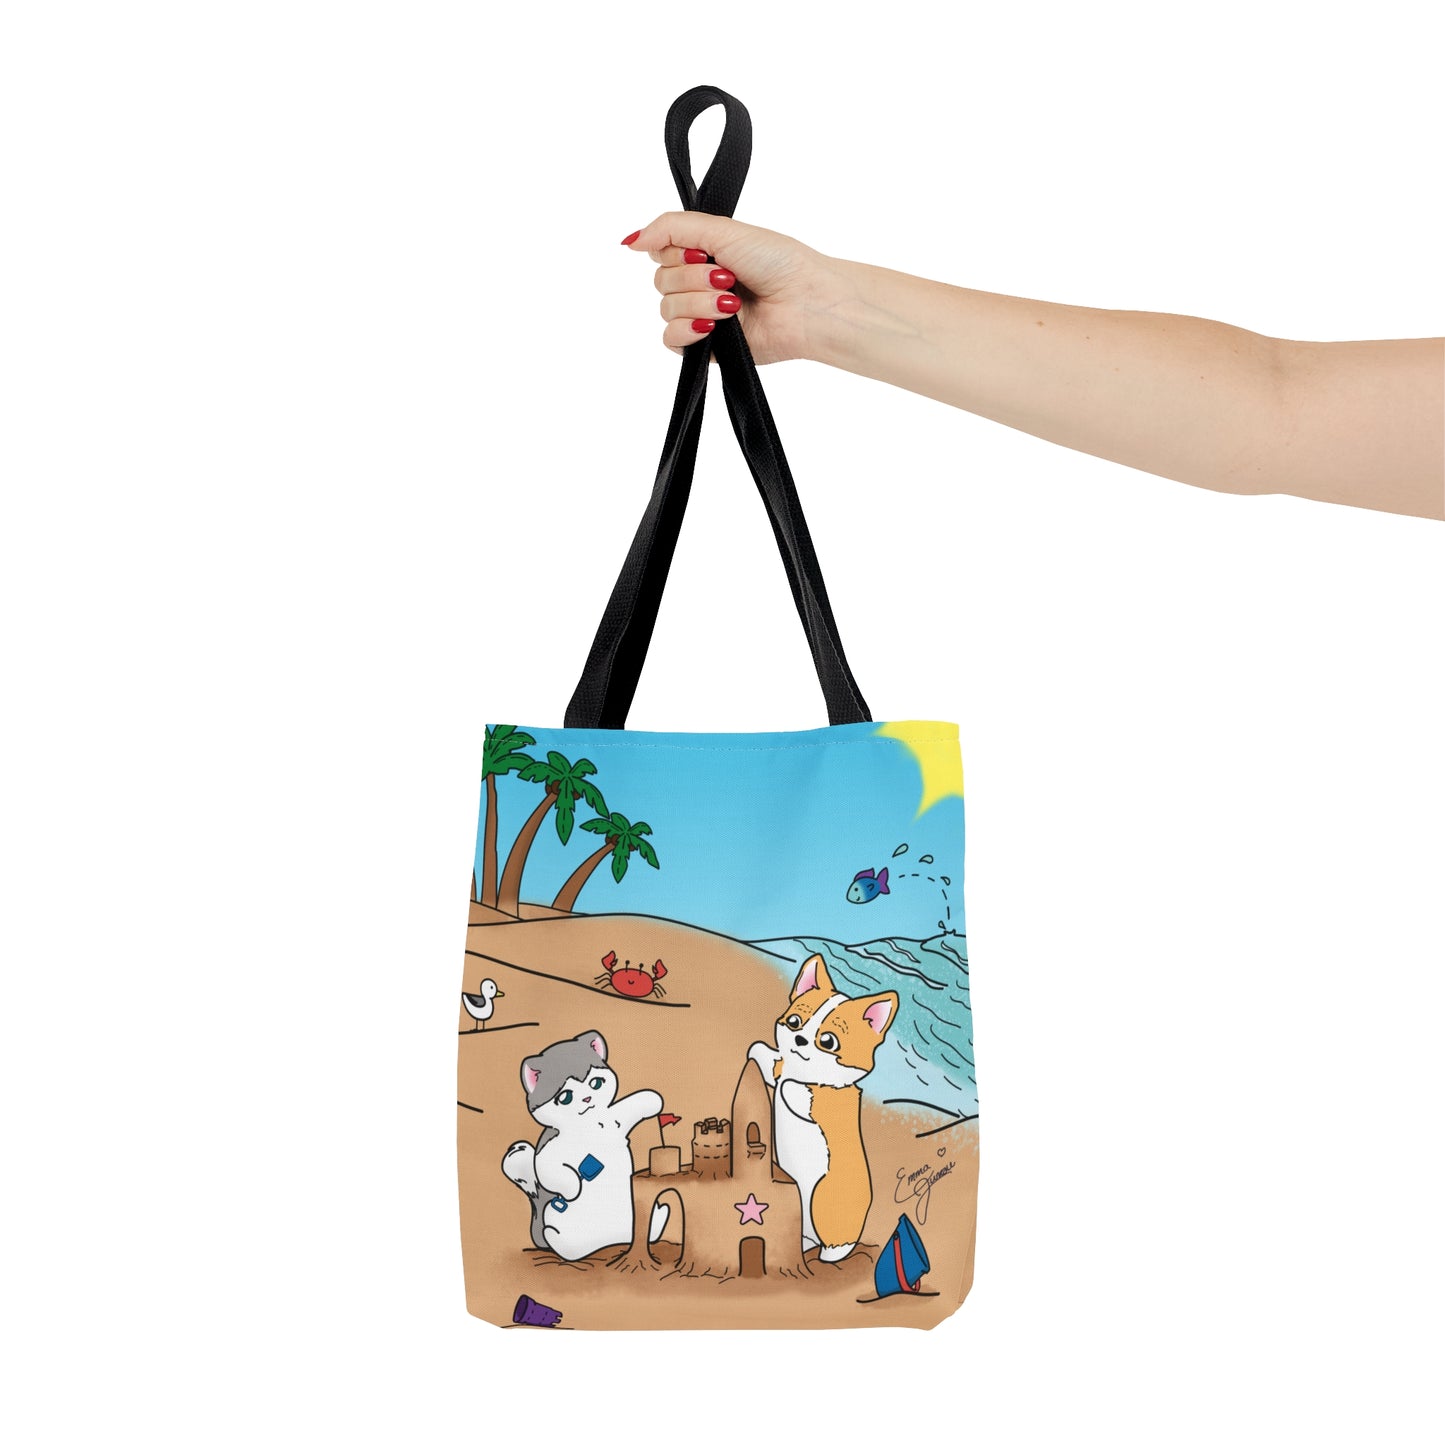 Kitty&Corgi Build a Sandcastle Tote Bag (All over print)